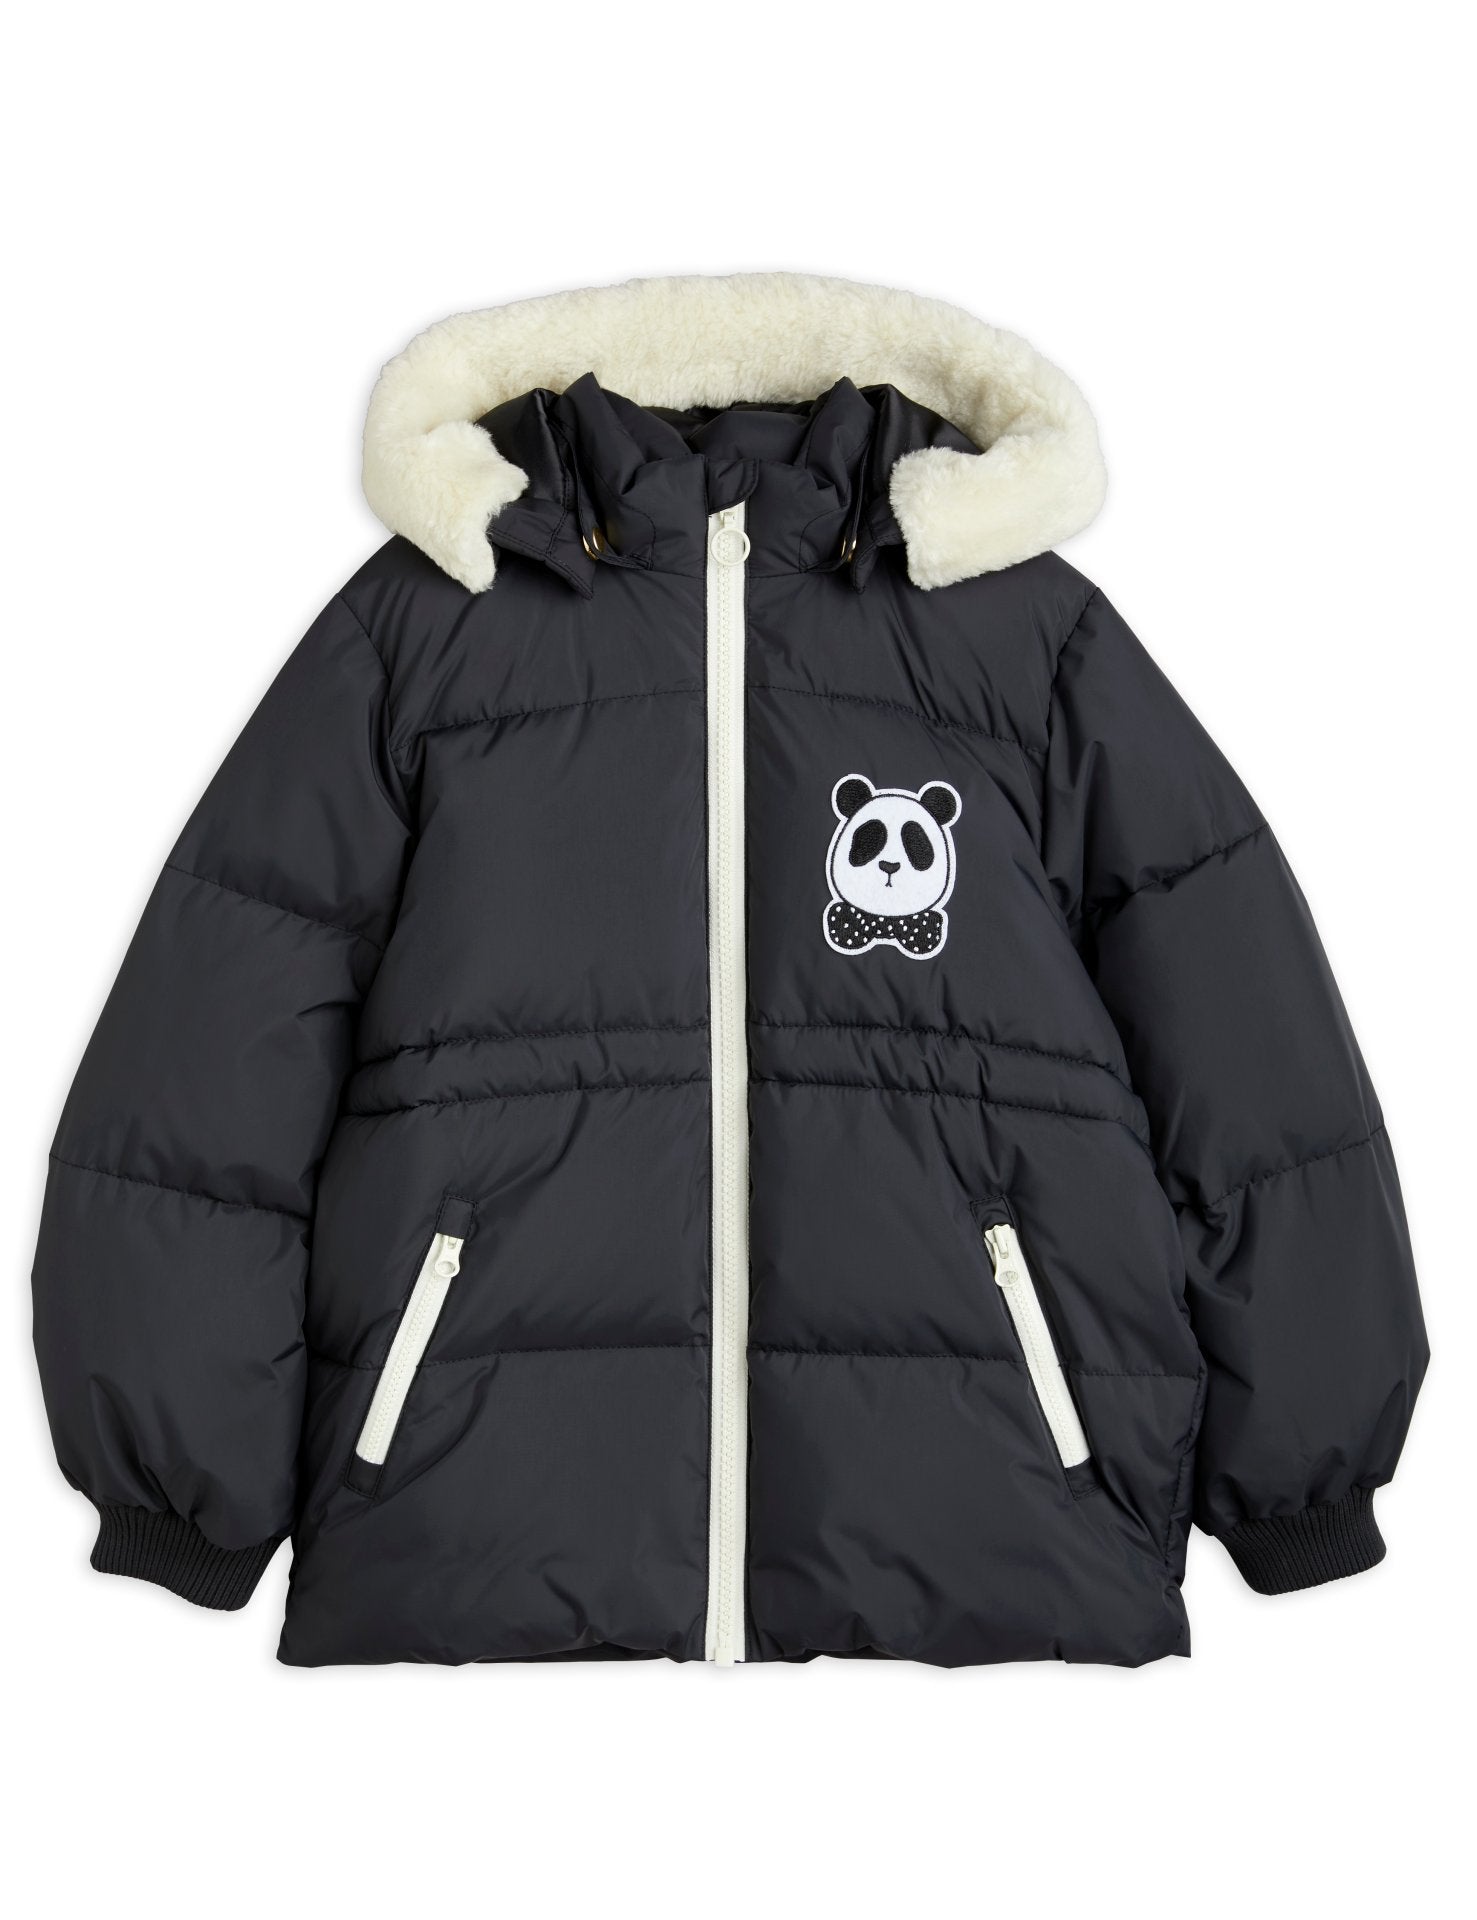 Panda hooded puffer jacket